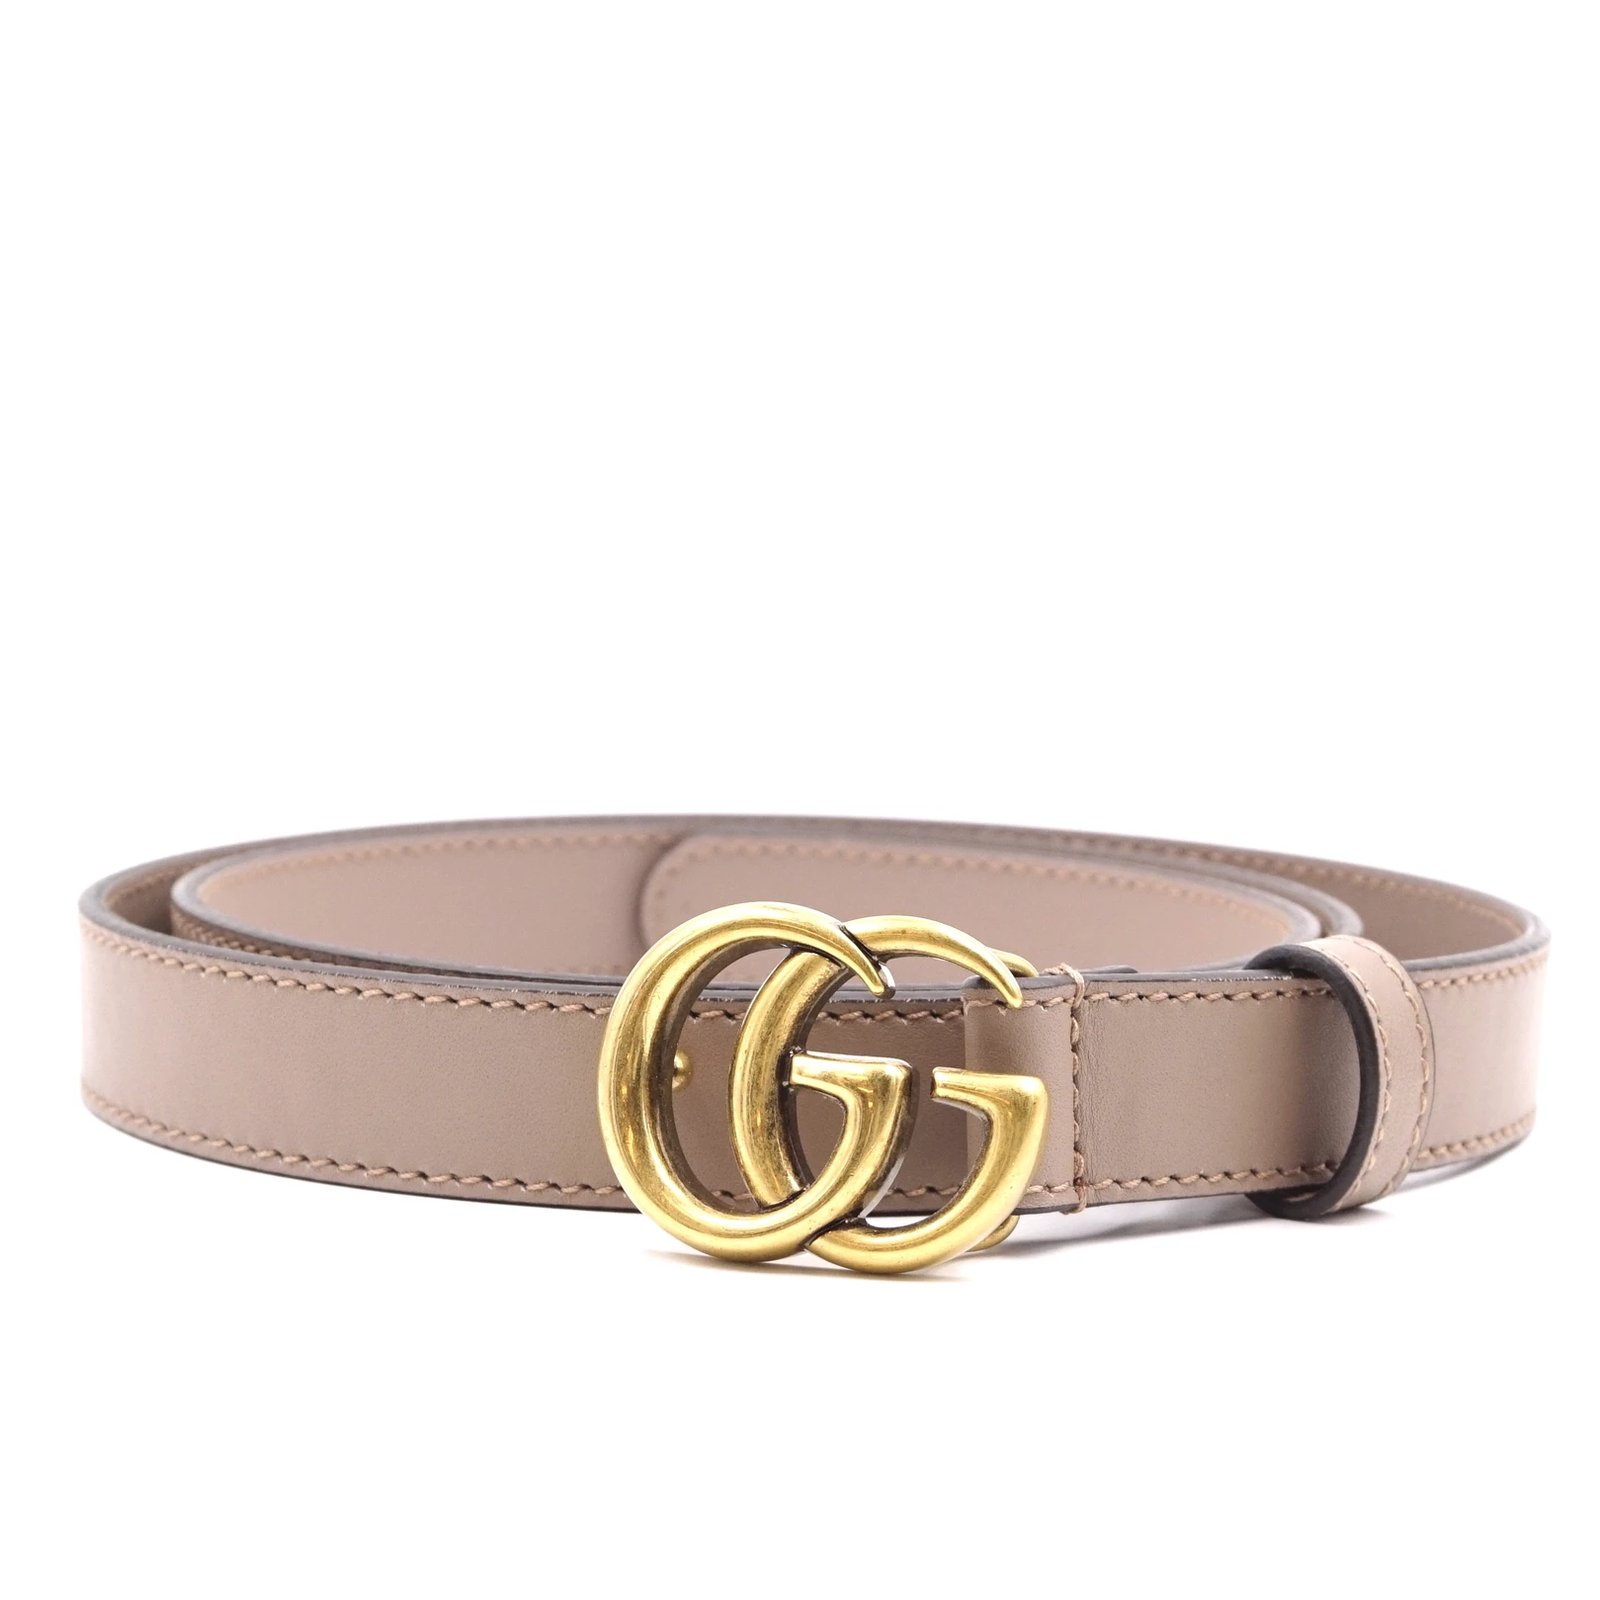 gucci size 90 belt